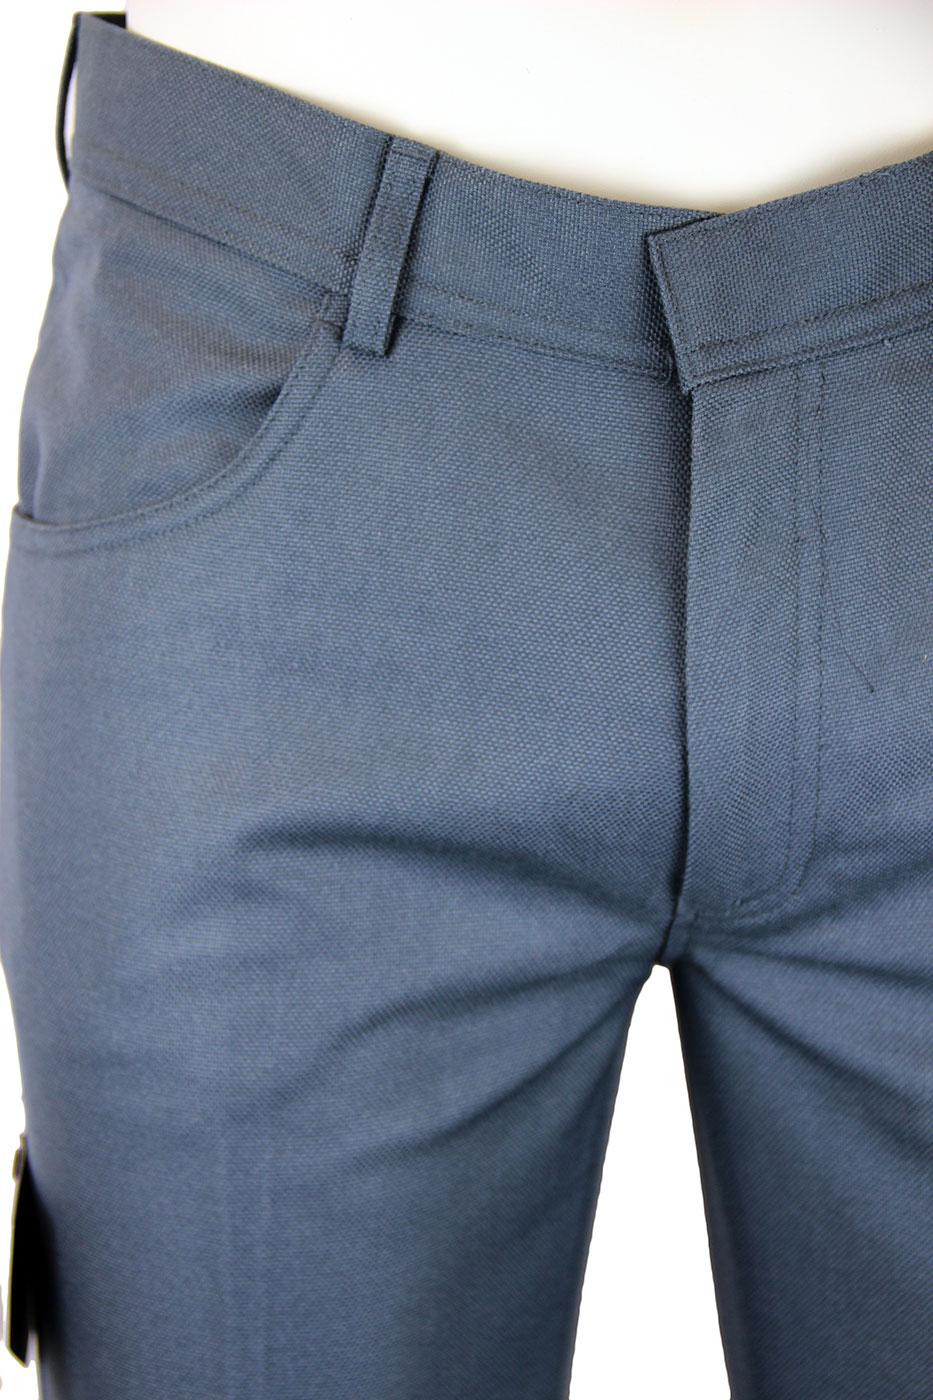 Qc for represent carpenter jeans trousers : r/FashionReps